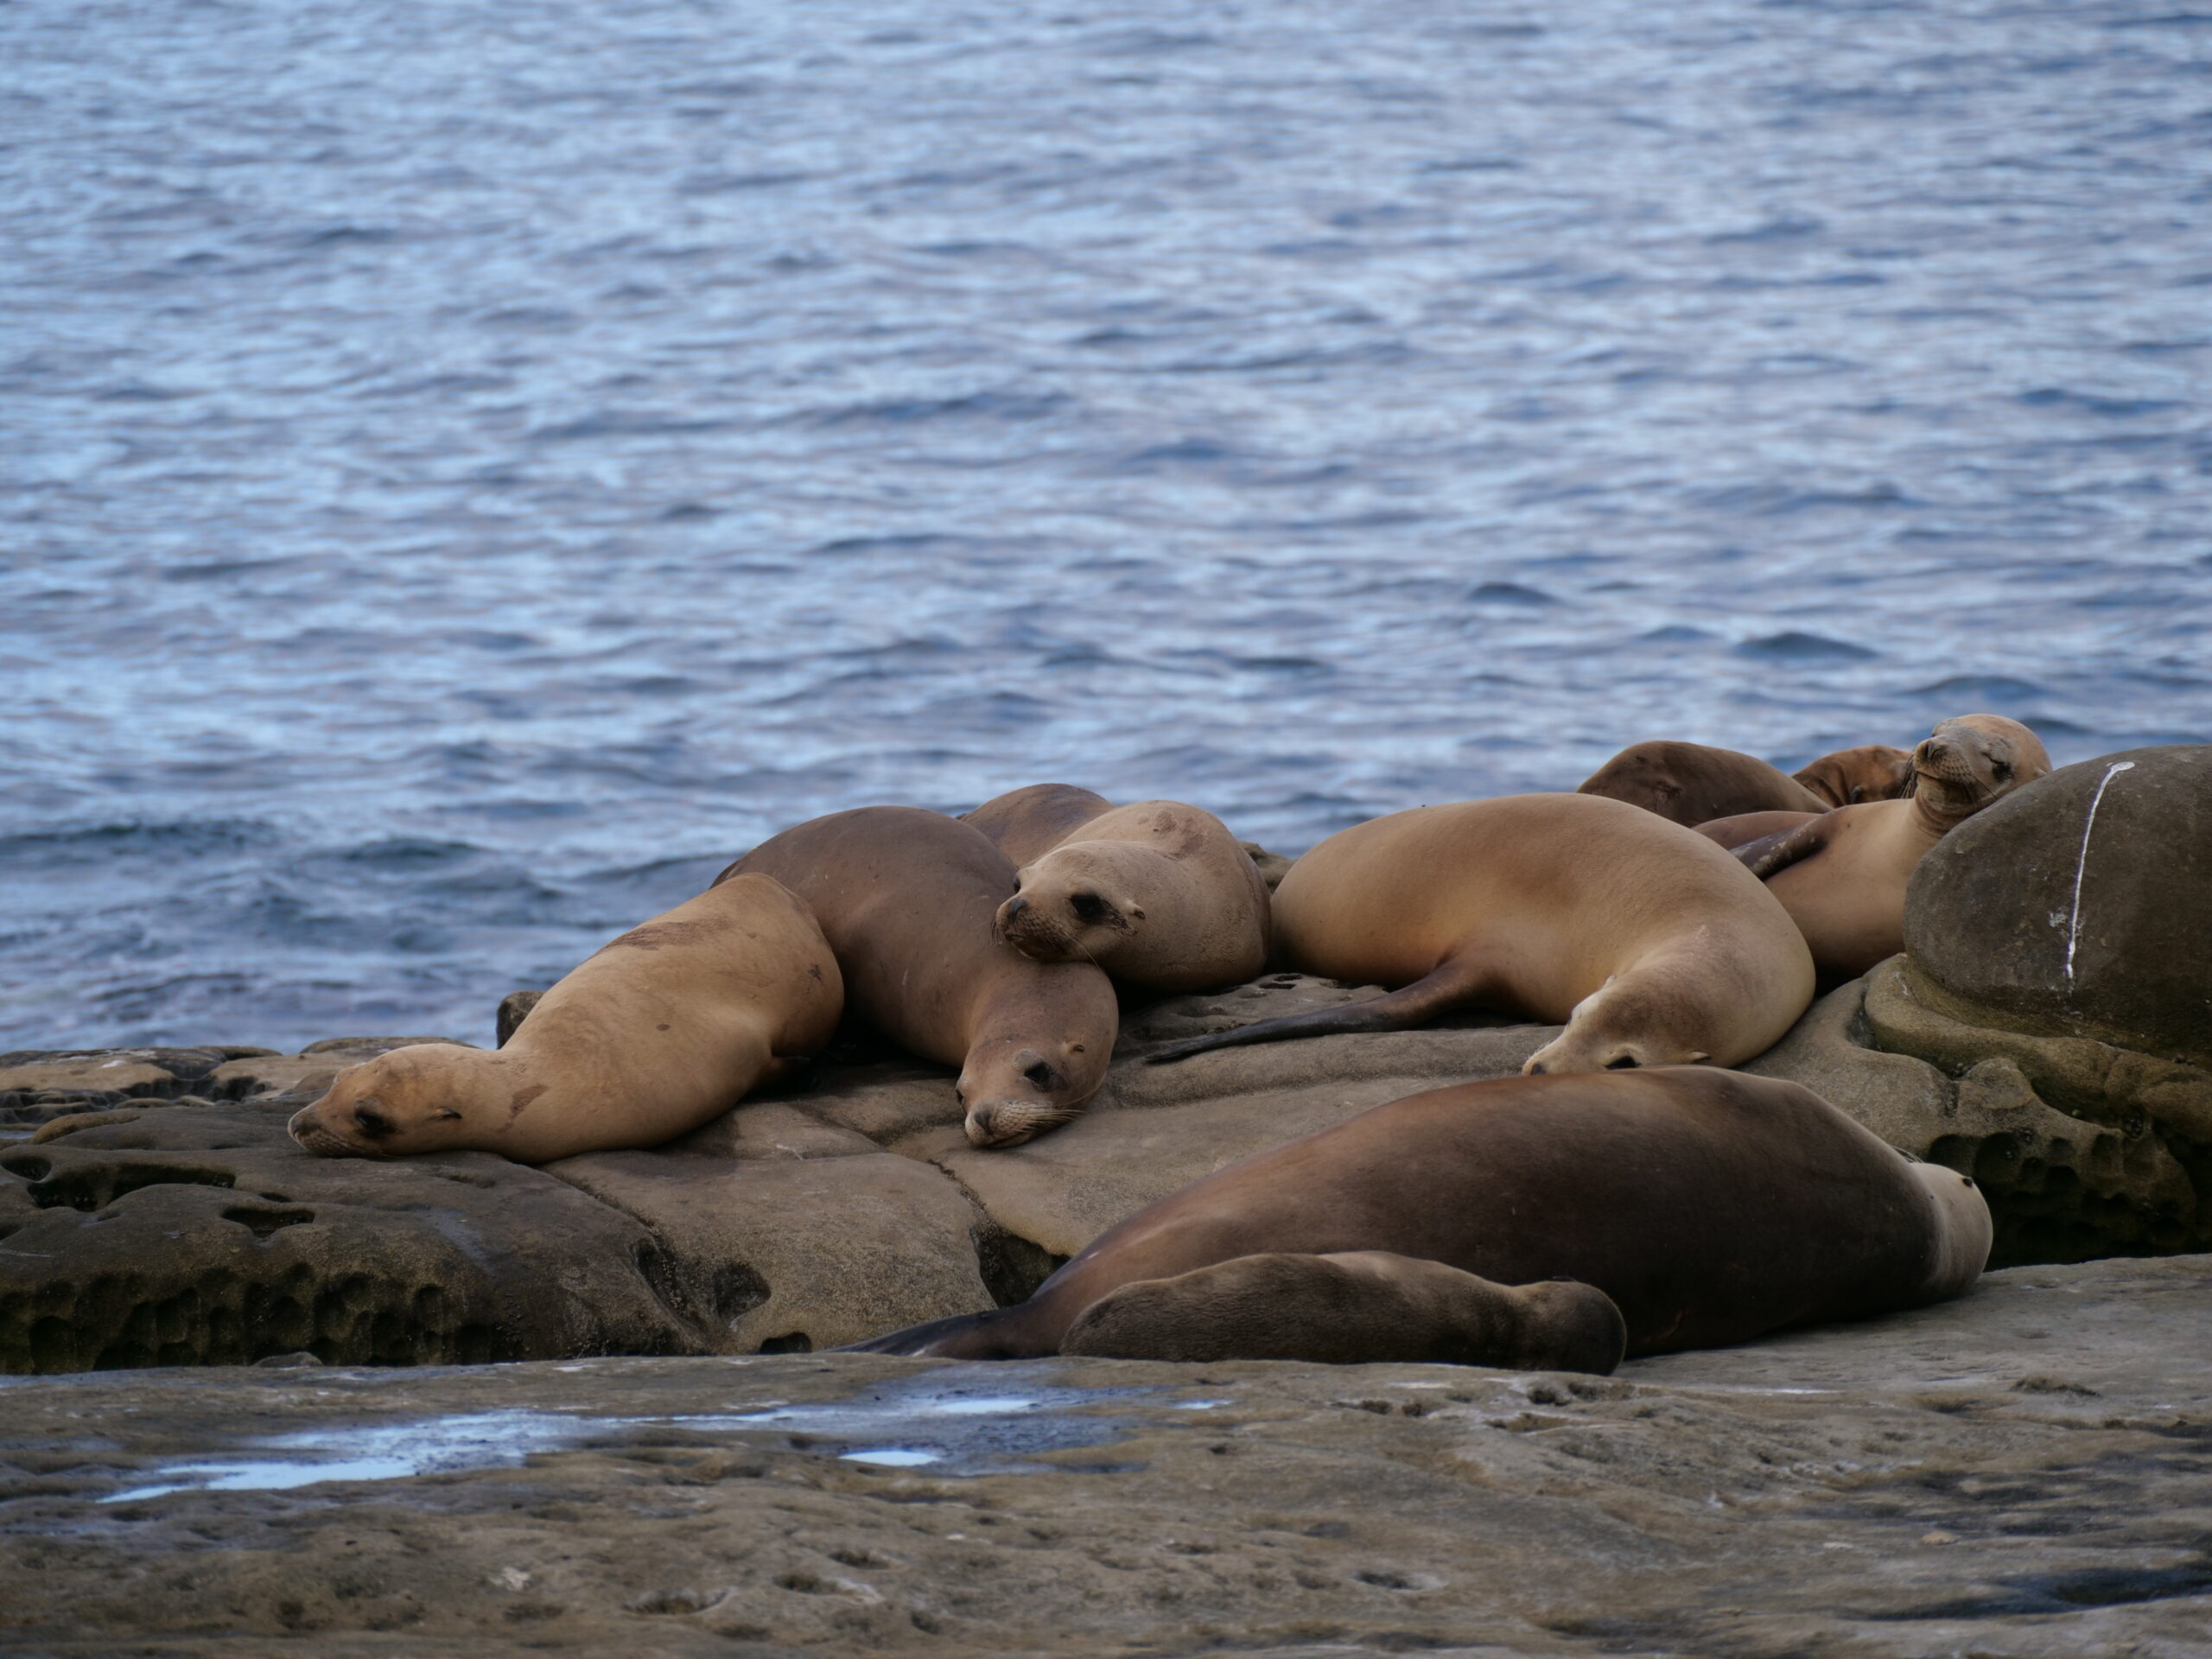 Sea Lions or Seals?